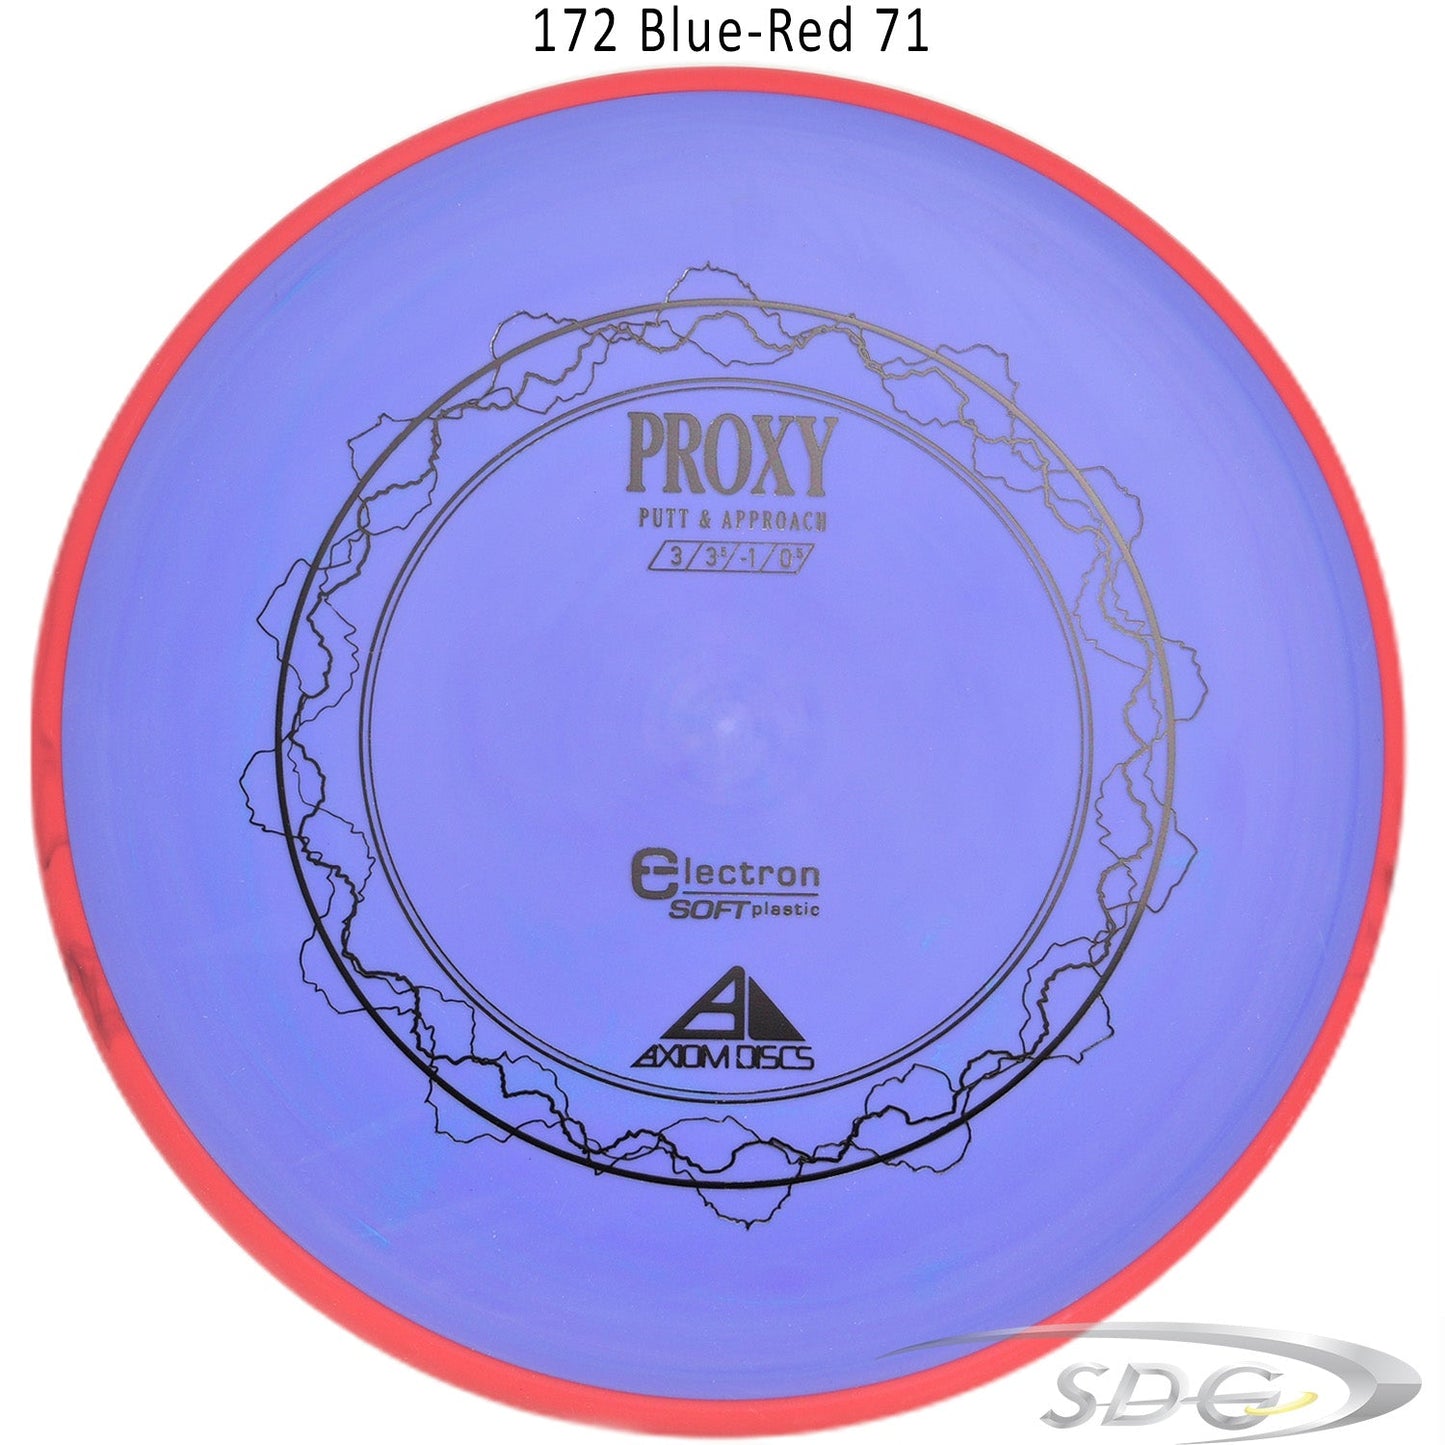 axiom-electron-proxy-soft-disc-golf-putt-approach 172 Blue-Red 71 